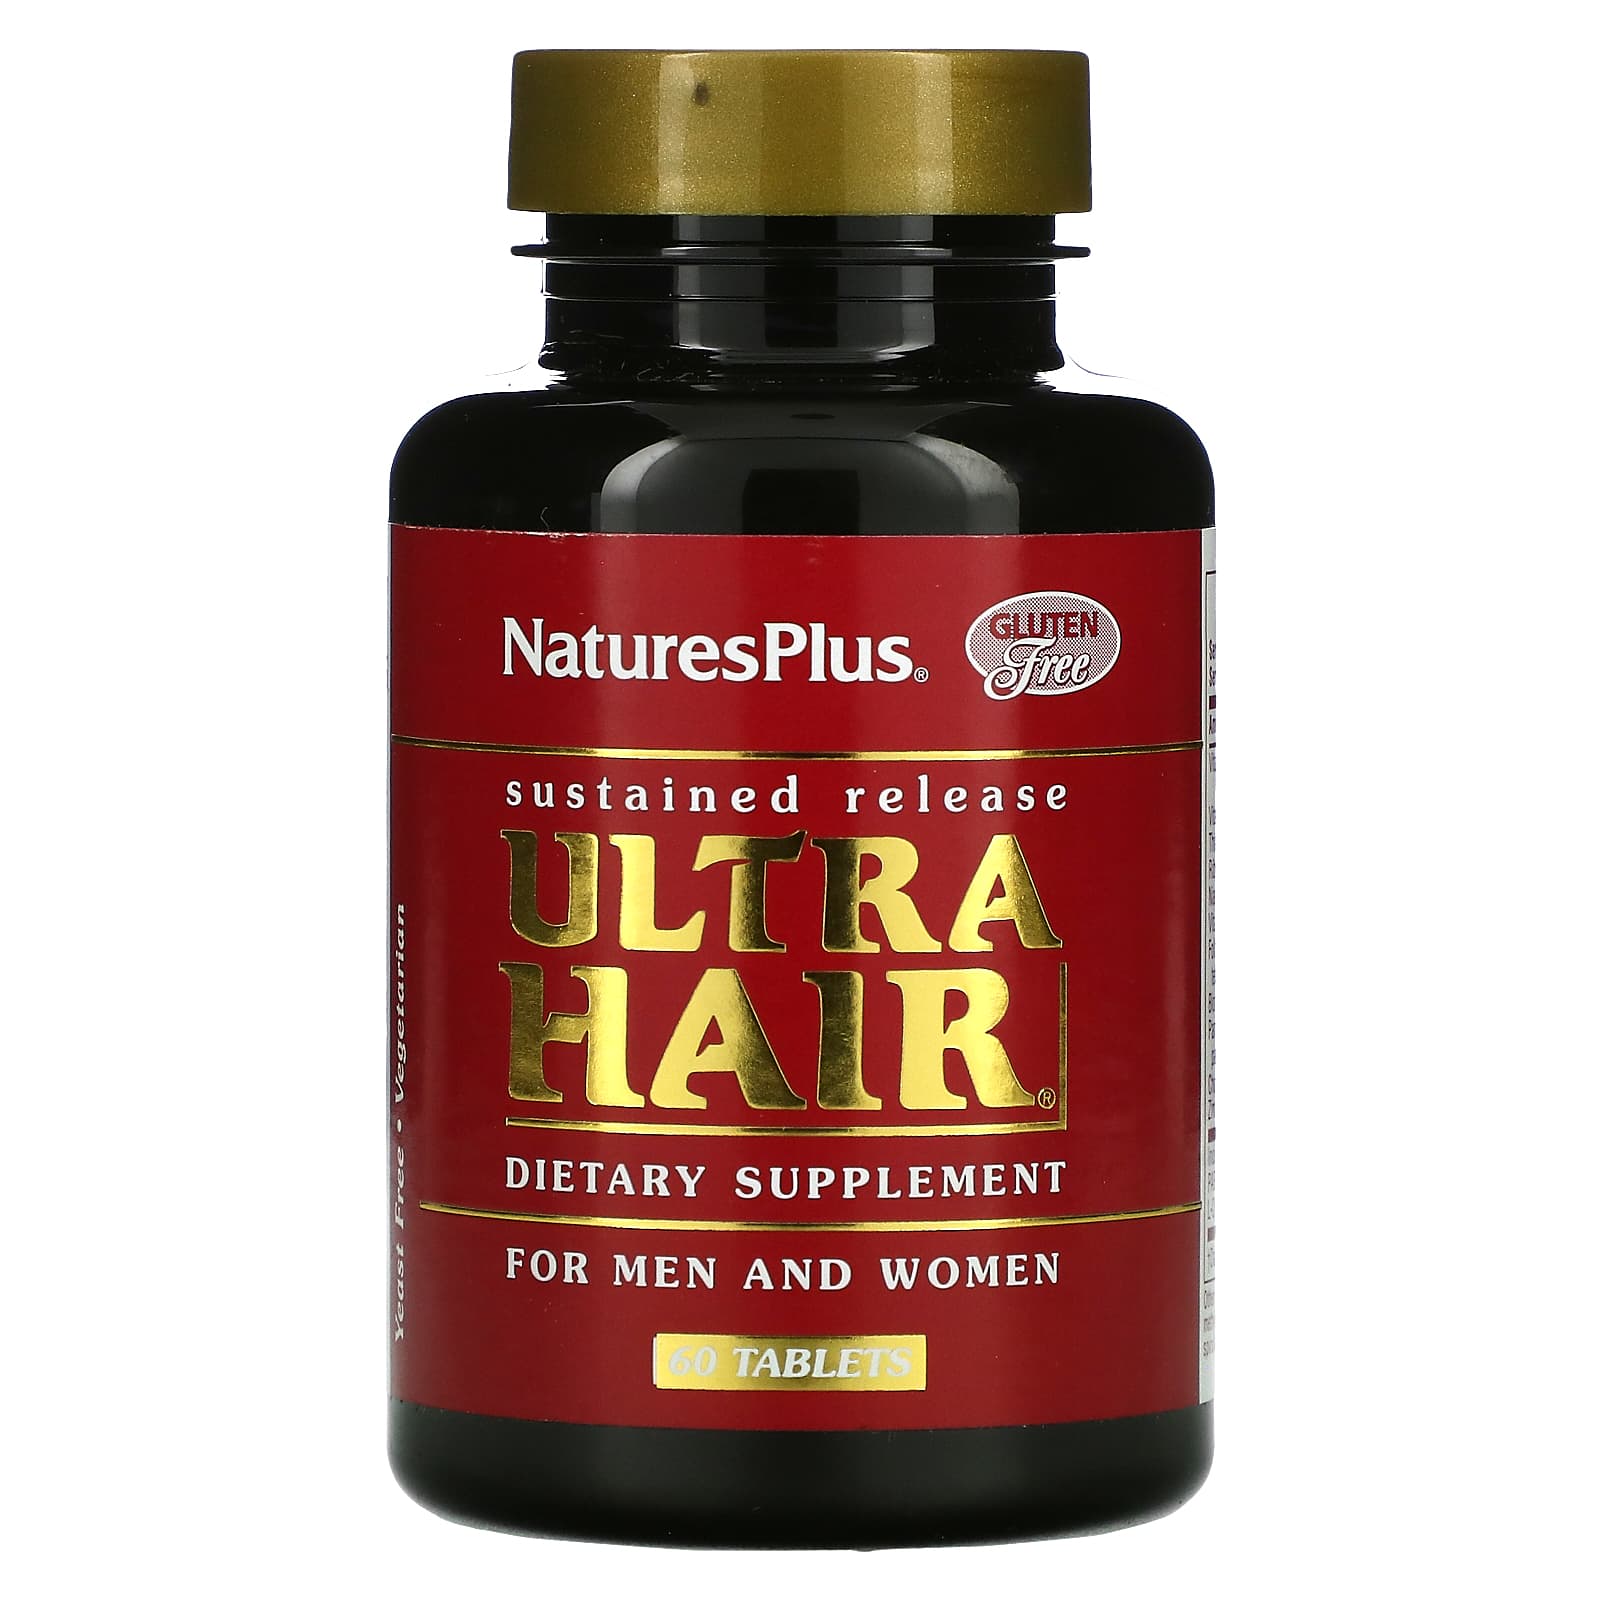 Витамины NaturesPlus для мужчин и женщин, 60 таблеток naturesplus ultra hair для мужчин и женщин 60 таблеток